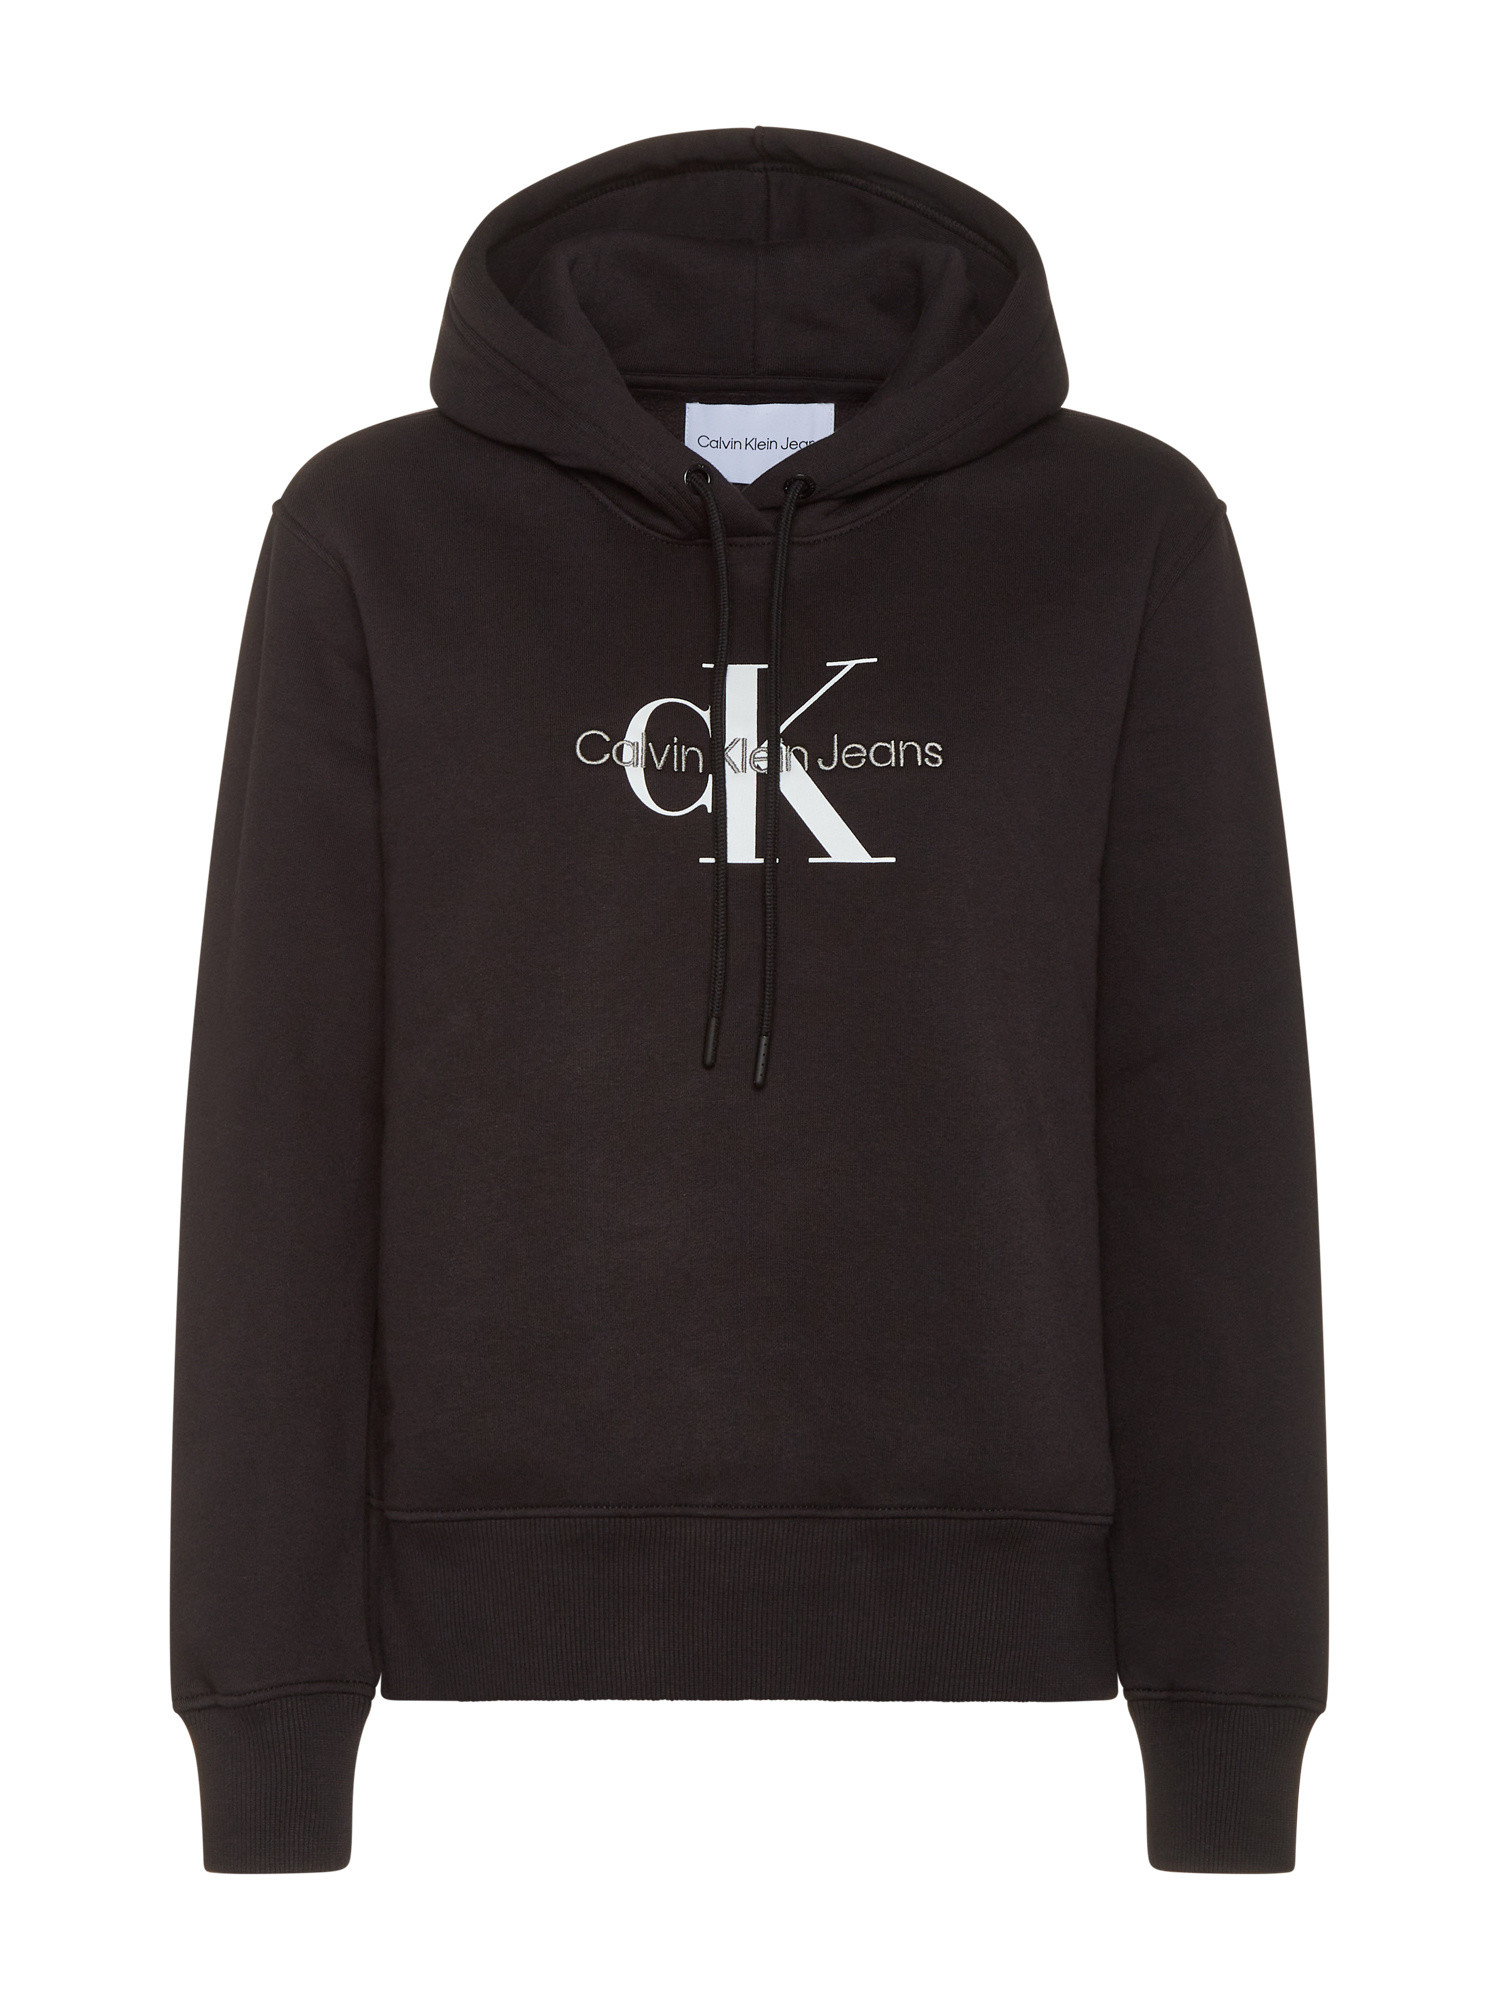 Calvin Klein Jeans -Logo hoodie, Black, large image number 0